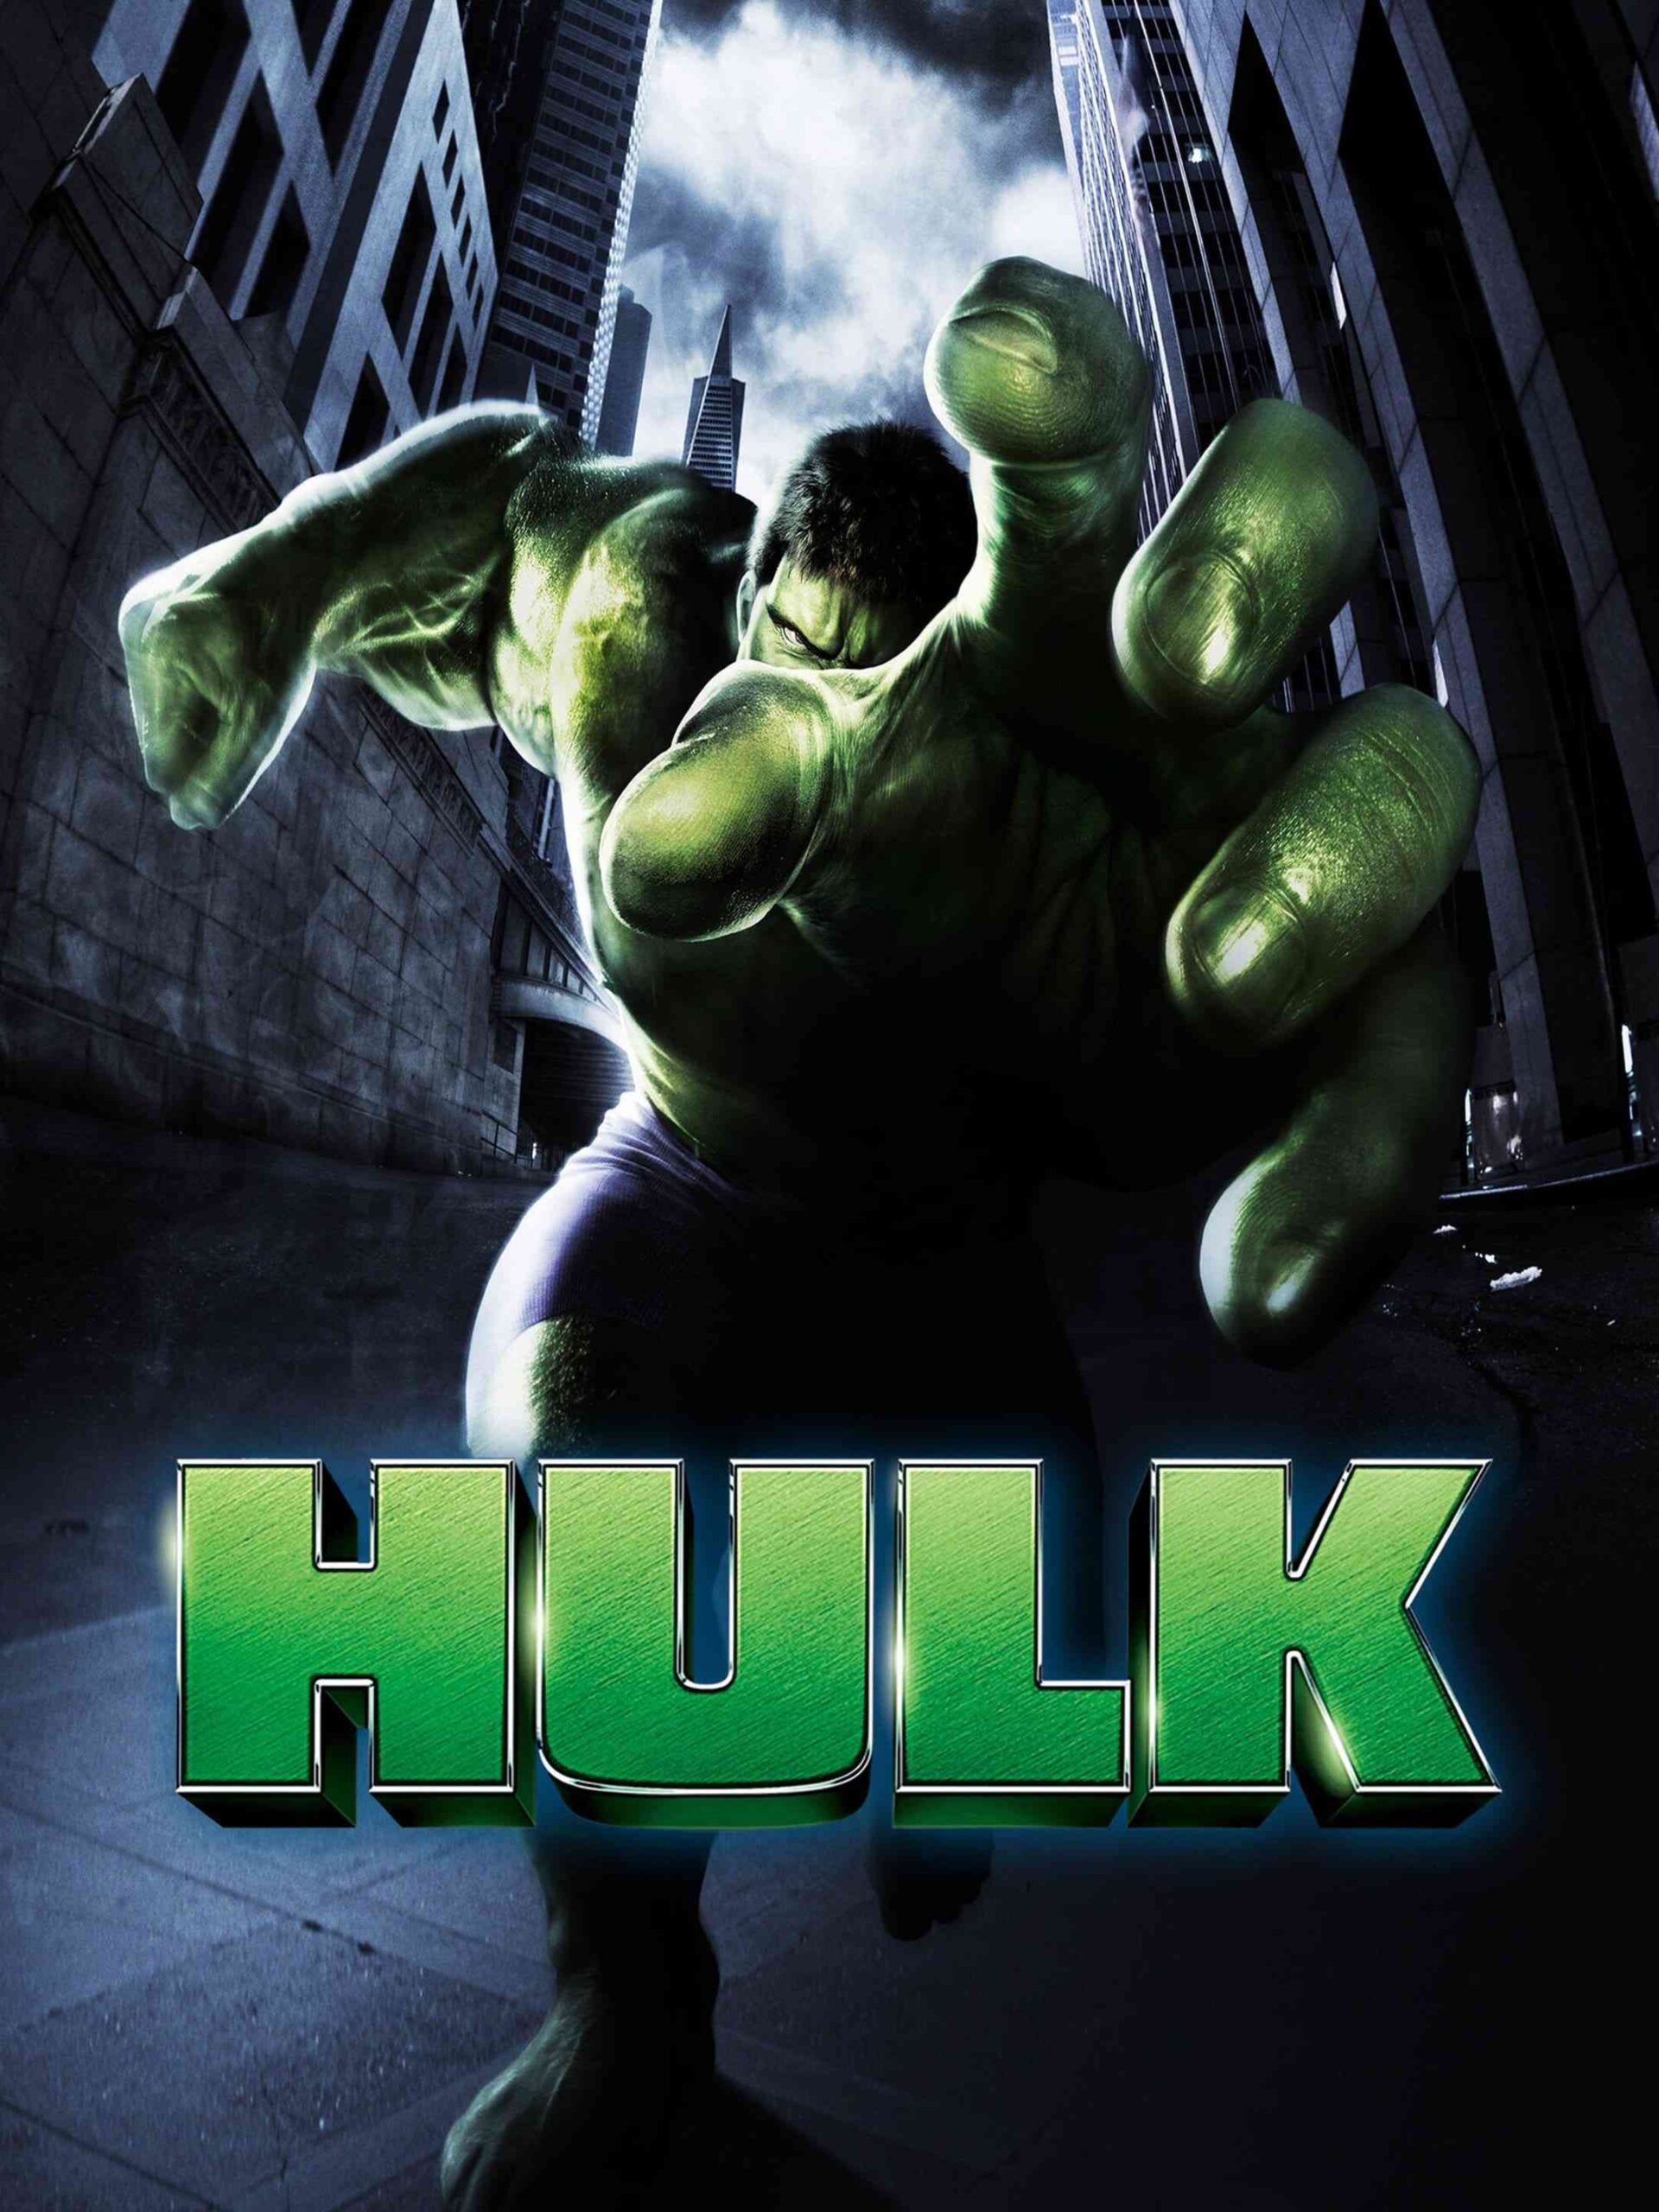 FULL MOVIE: Hulk (2003) [Action]